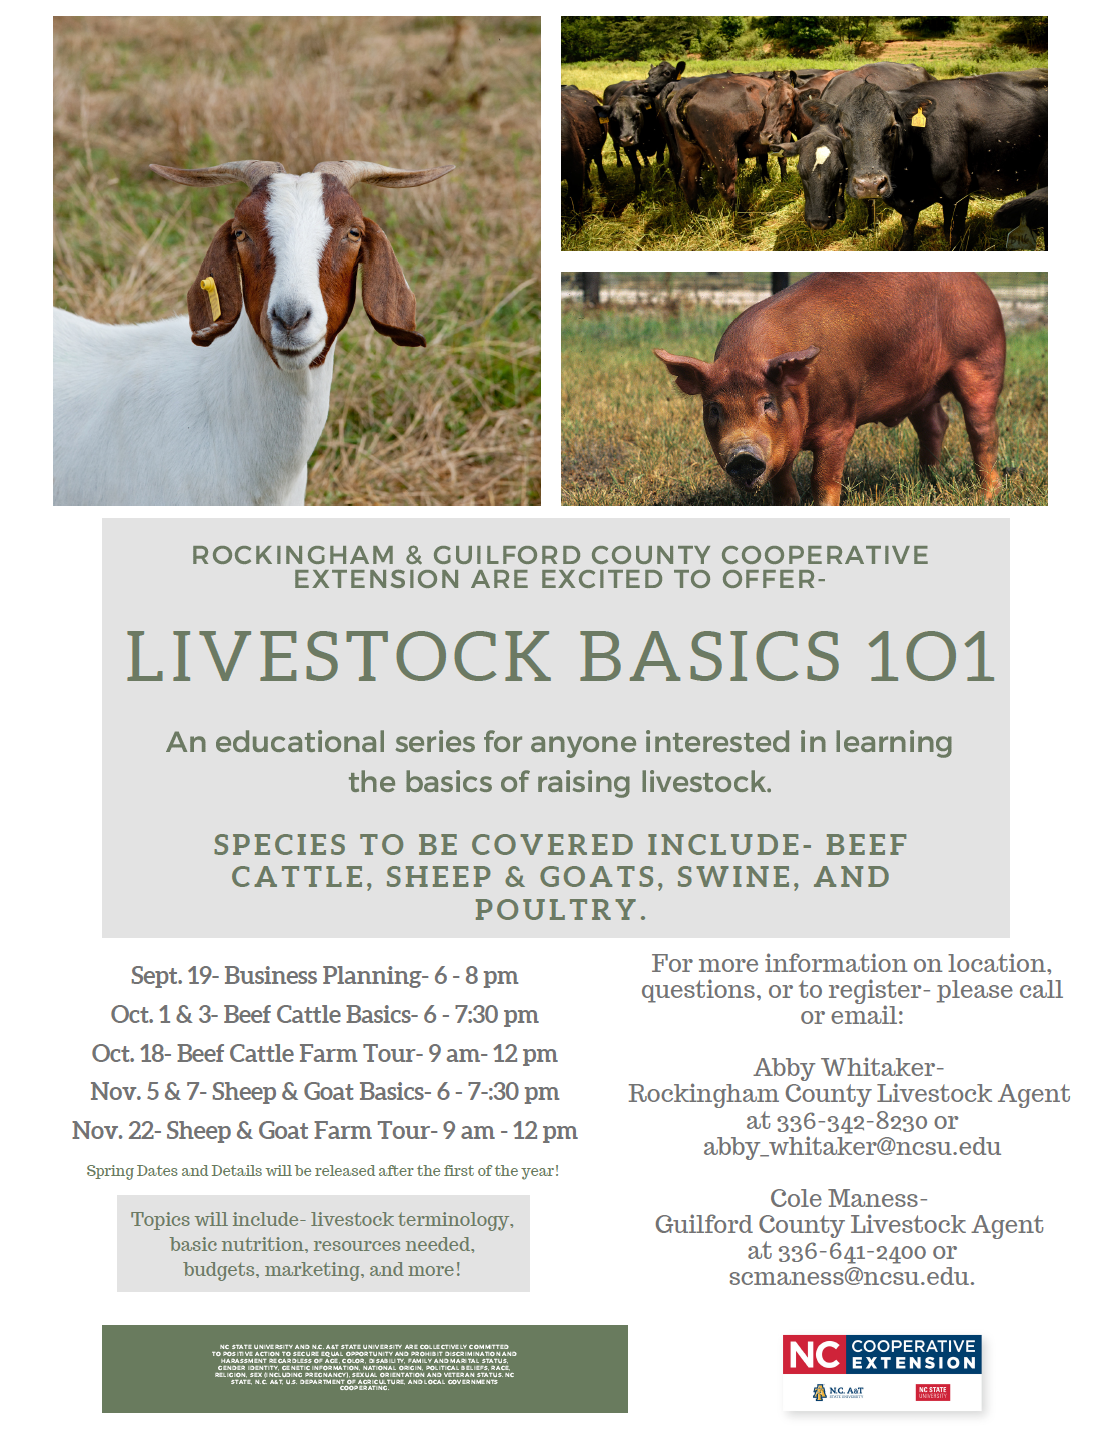 Livestock Basics 101 flyer image